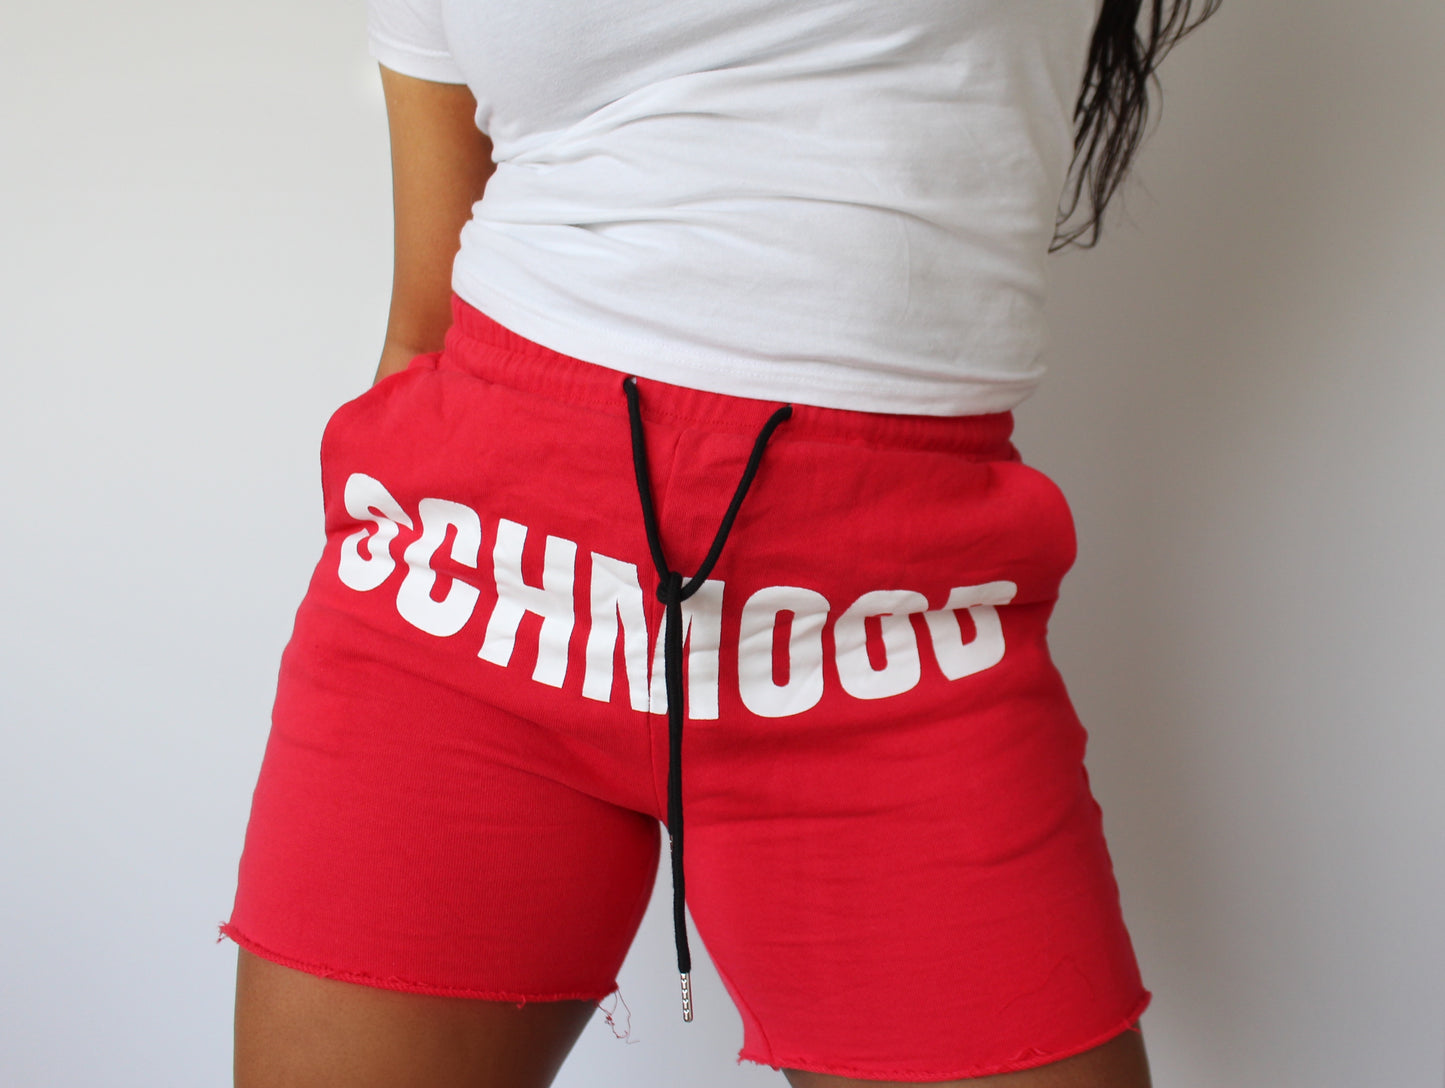 SCHMOOD Sweat Shorts - Red/White